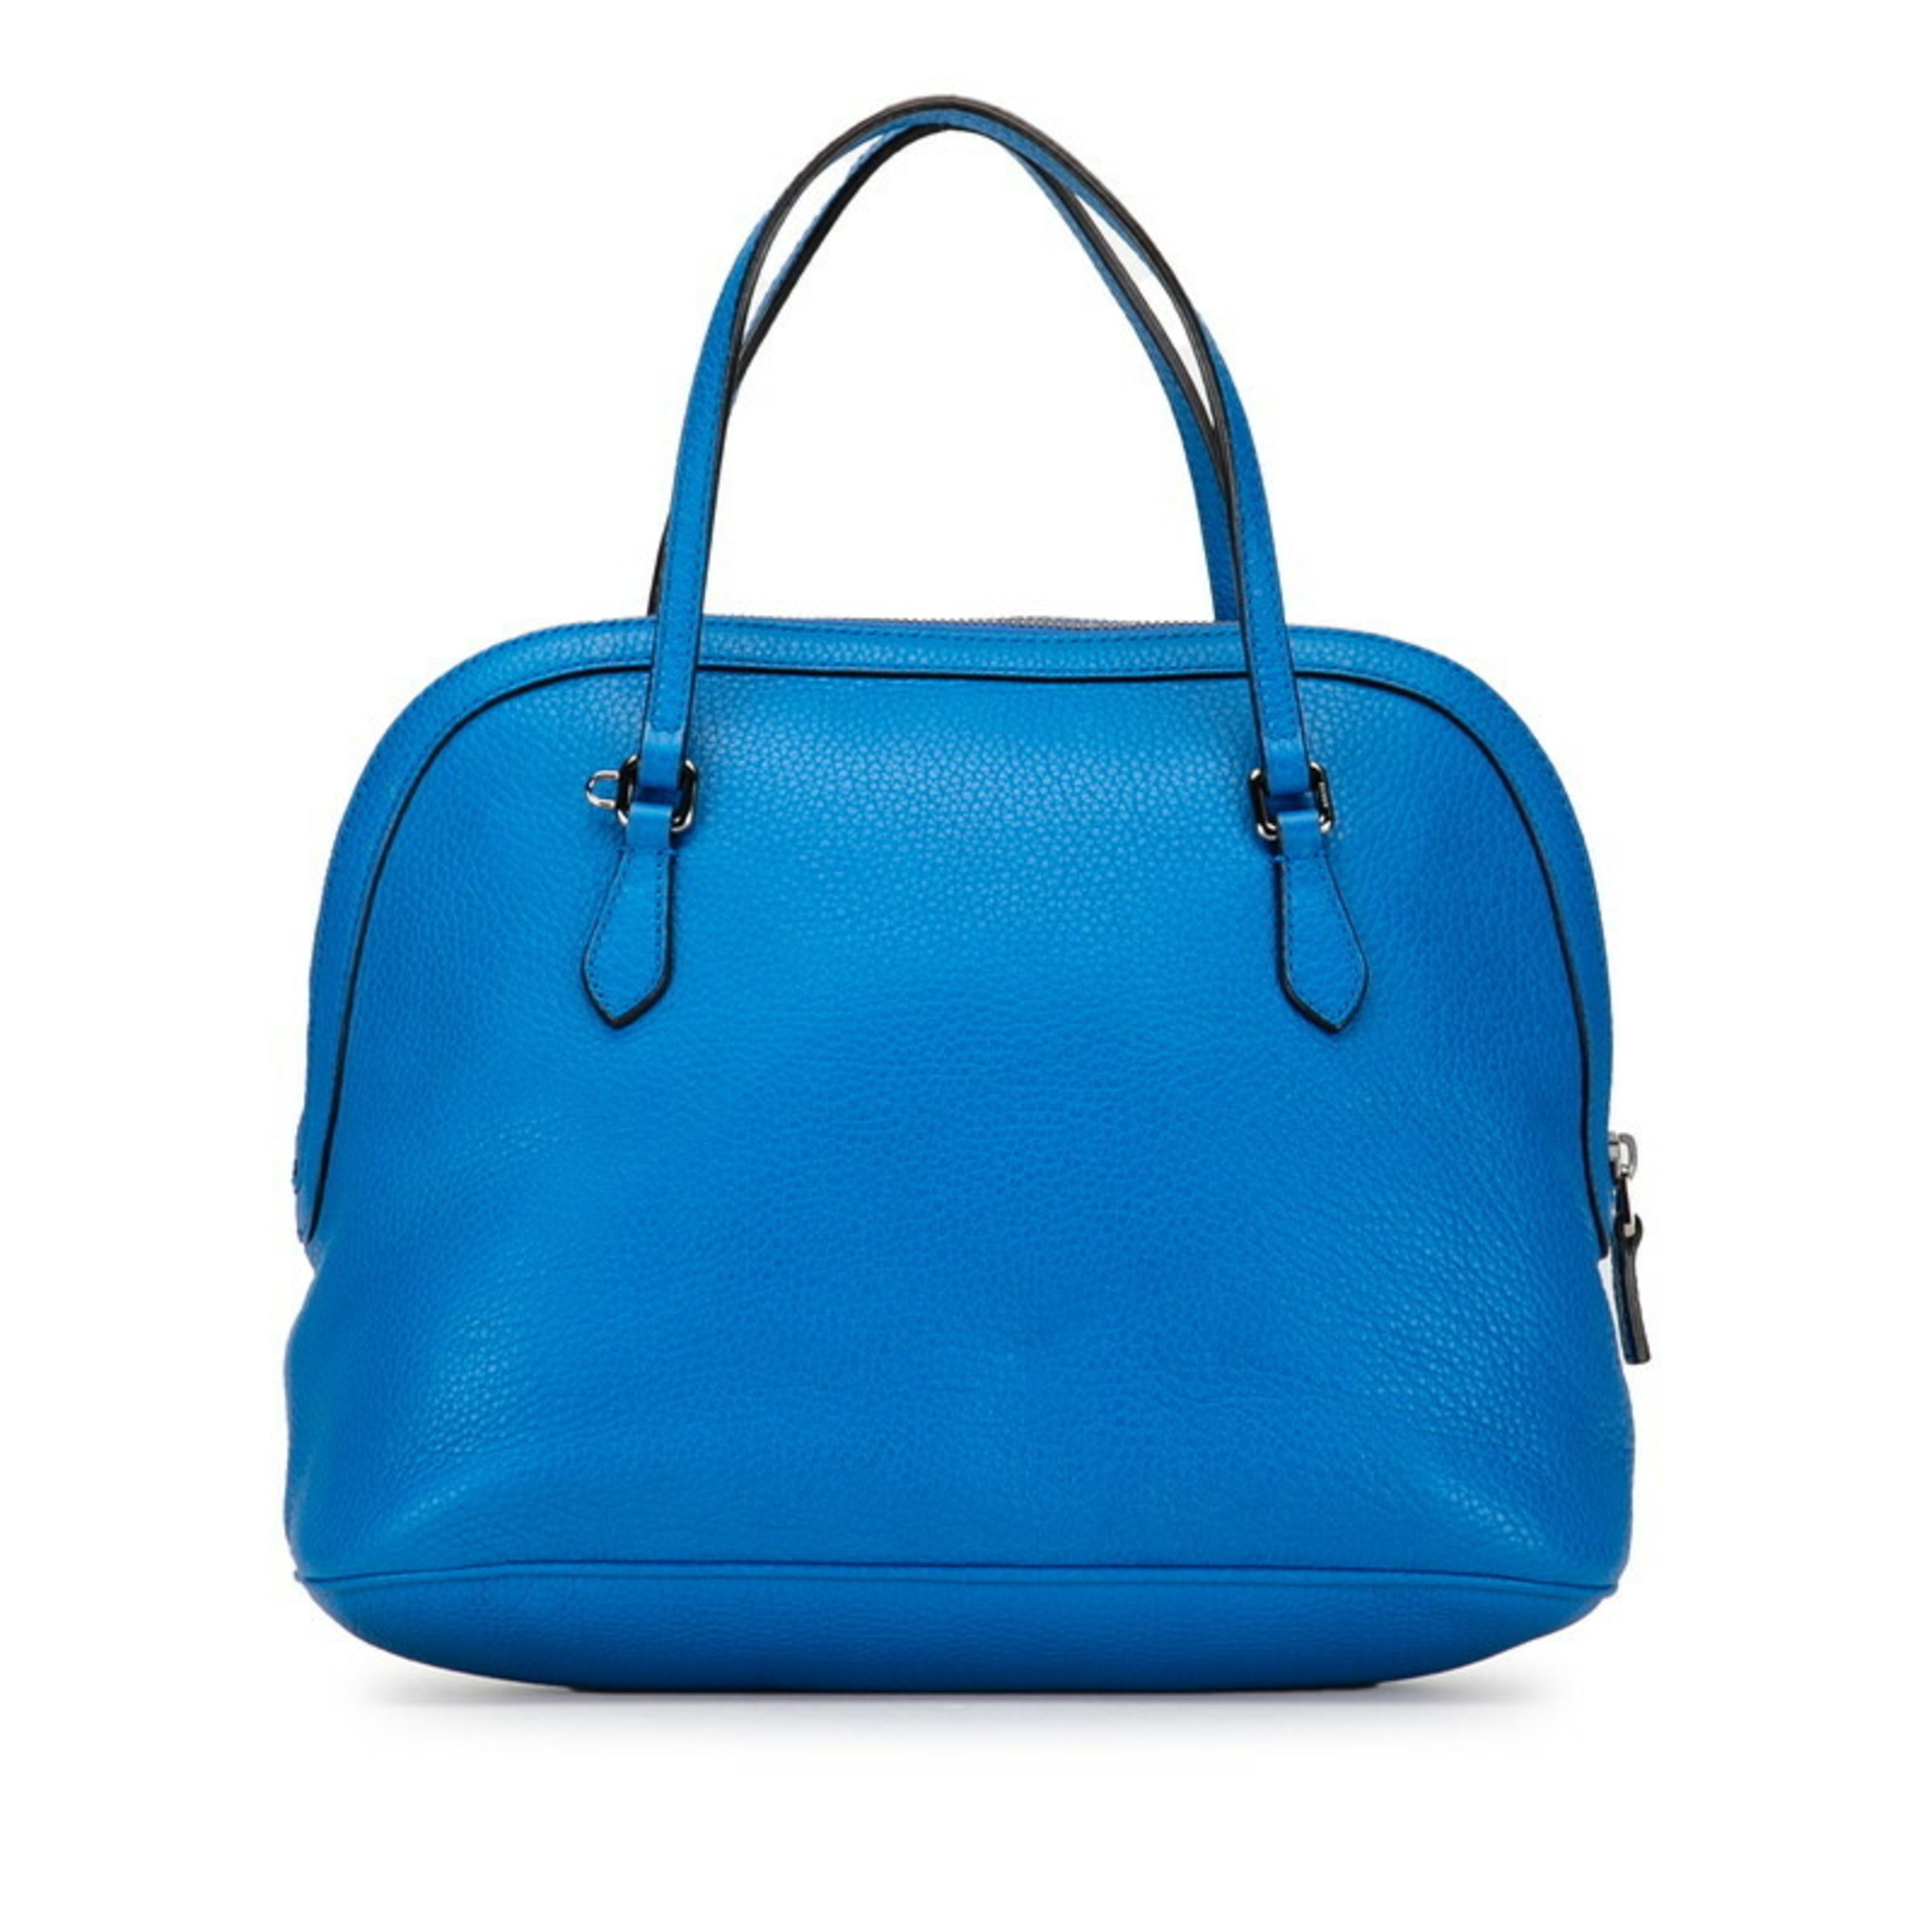 Gucci handbag shoulder bag blue leather ladies GUCCI